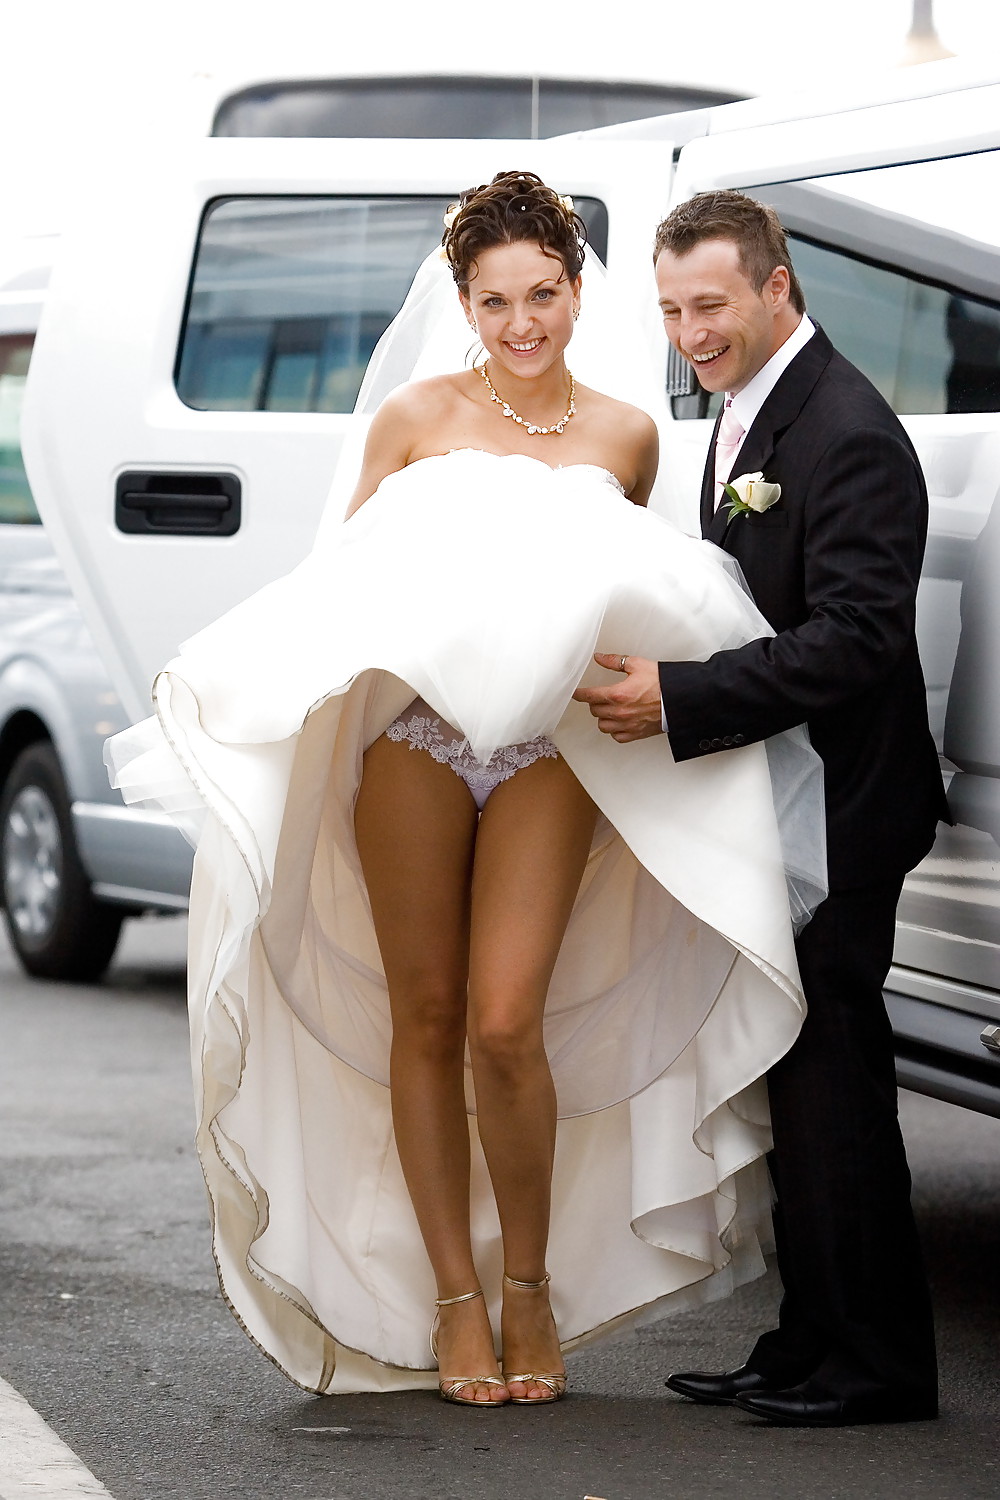 Sex BRIDES wedding voyeur upskirt white panties and bra image 39073939 picture